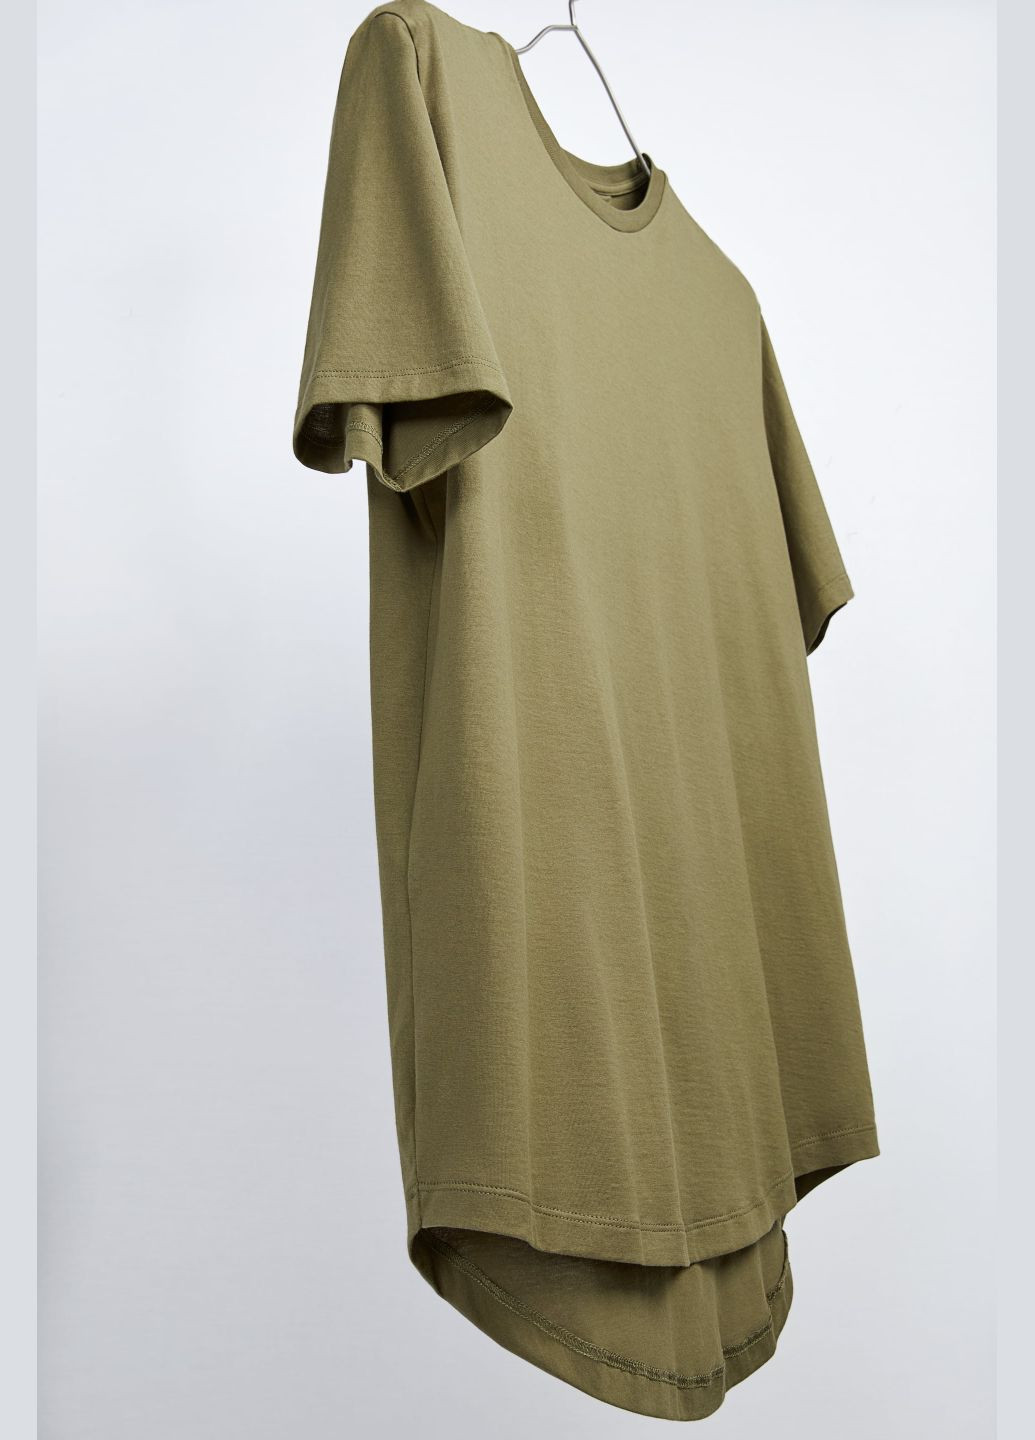 Хаки (оливковая) футболка Zara Long Fit 6264/355